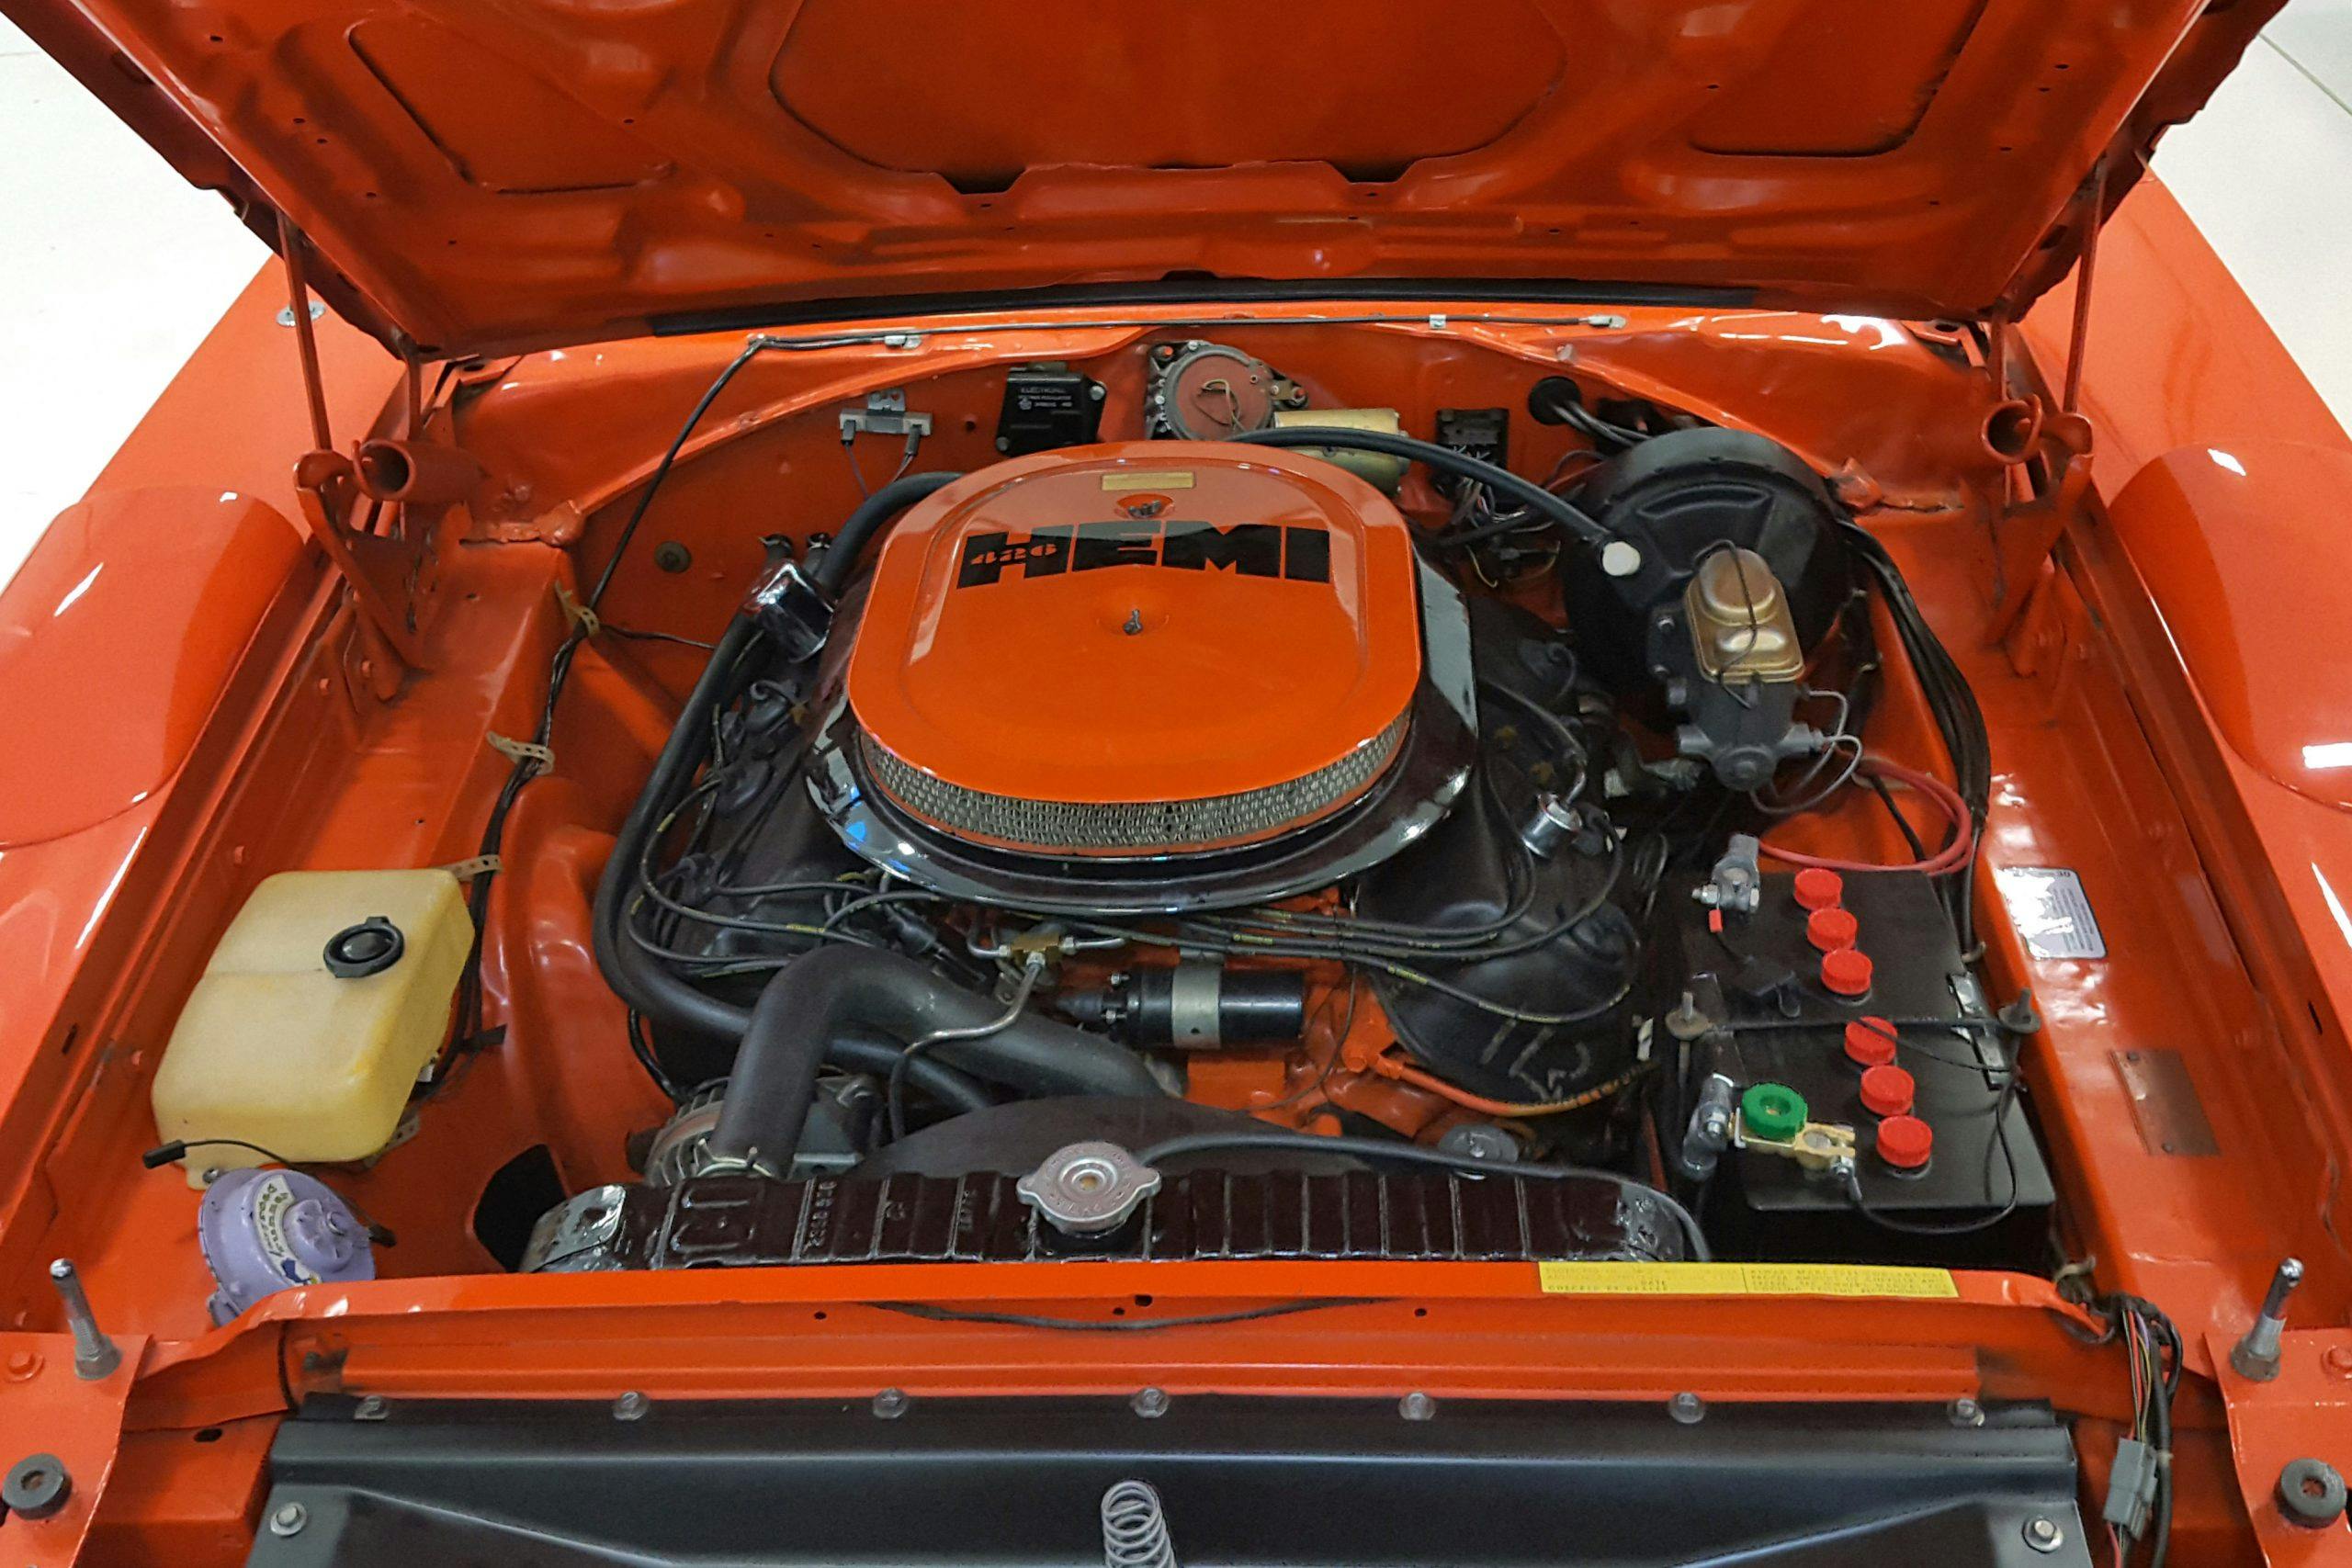 1970 Plymouth Superbird engine